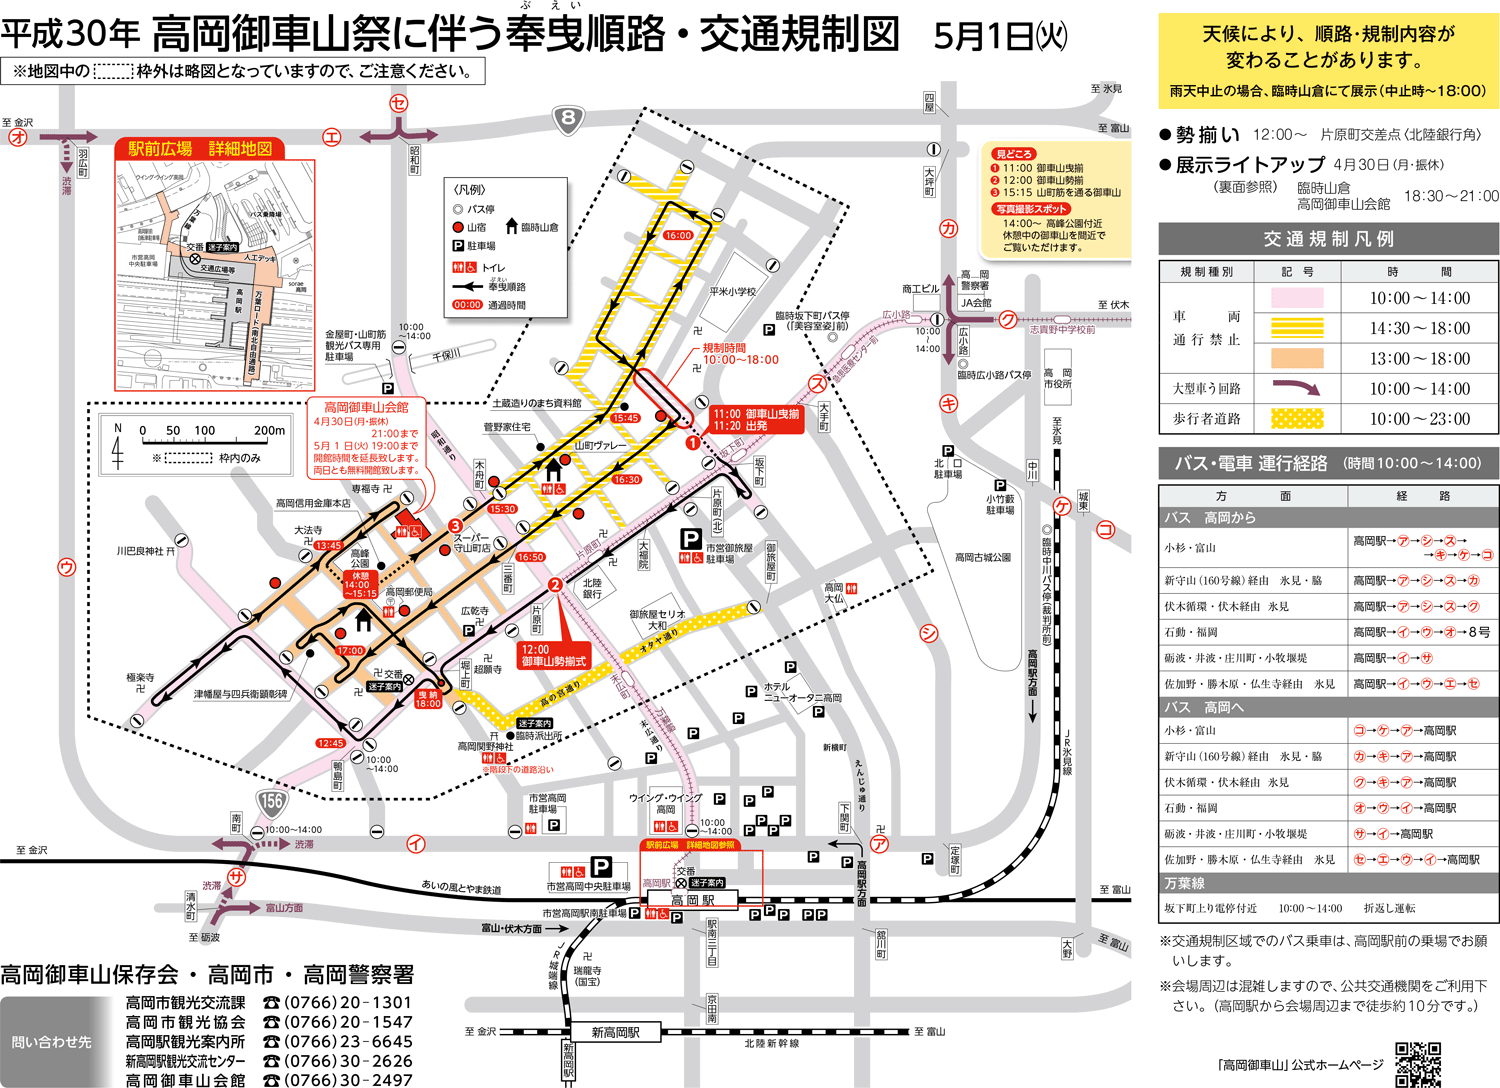 高岡御車山祭2018の交通規制情報